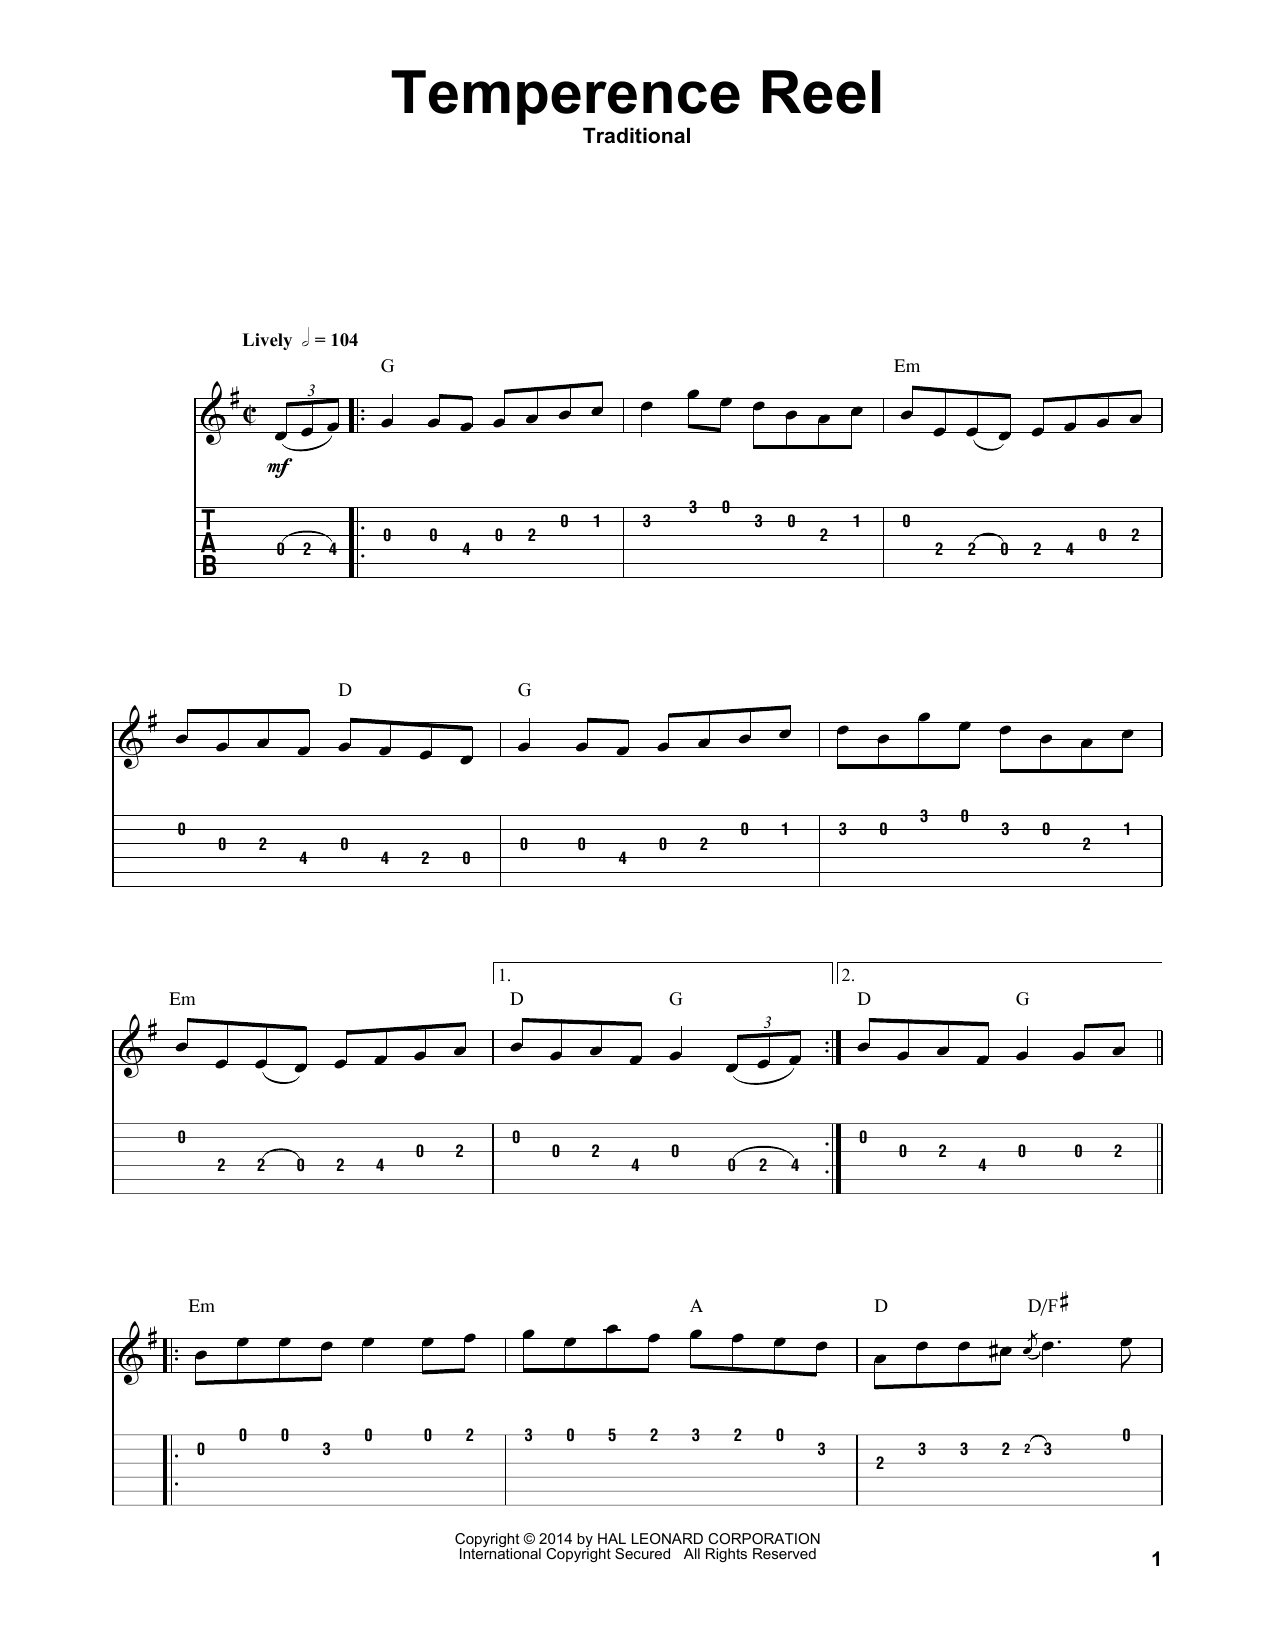 Irish Folksong Temperence Reel (Temperance Reel) Sheet Music Notes & Chords for Guitar Tab Play-Along - Download or Print PDF